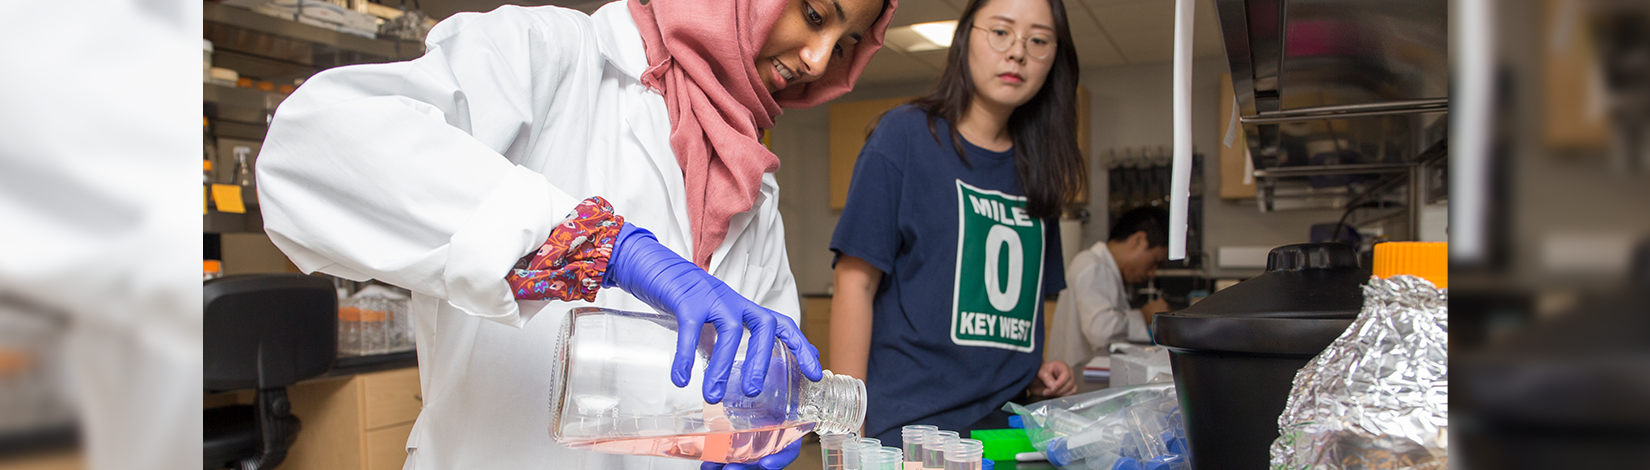 Female CALS student in white lab coat pours liquid into test tubes